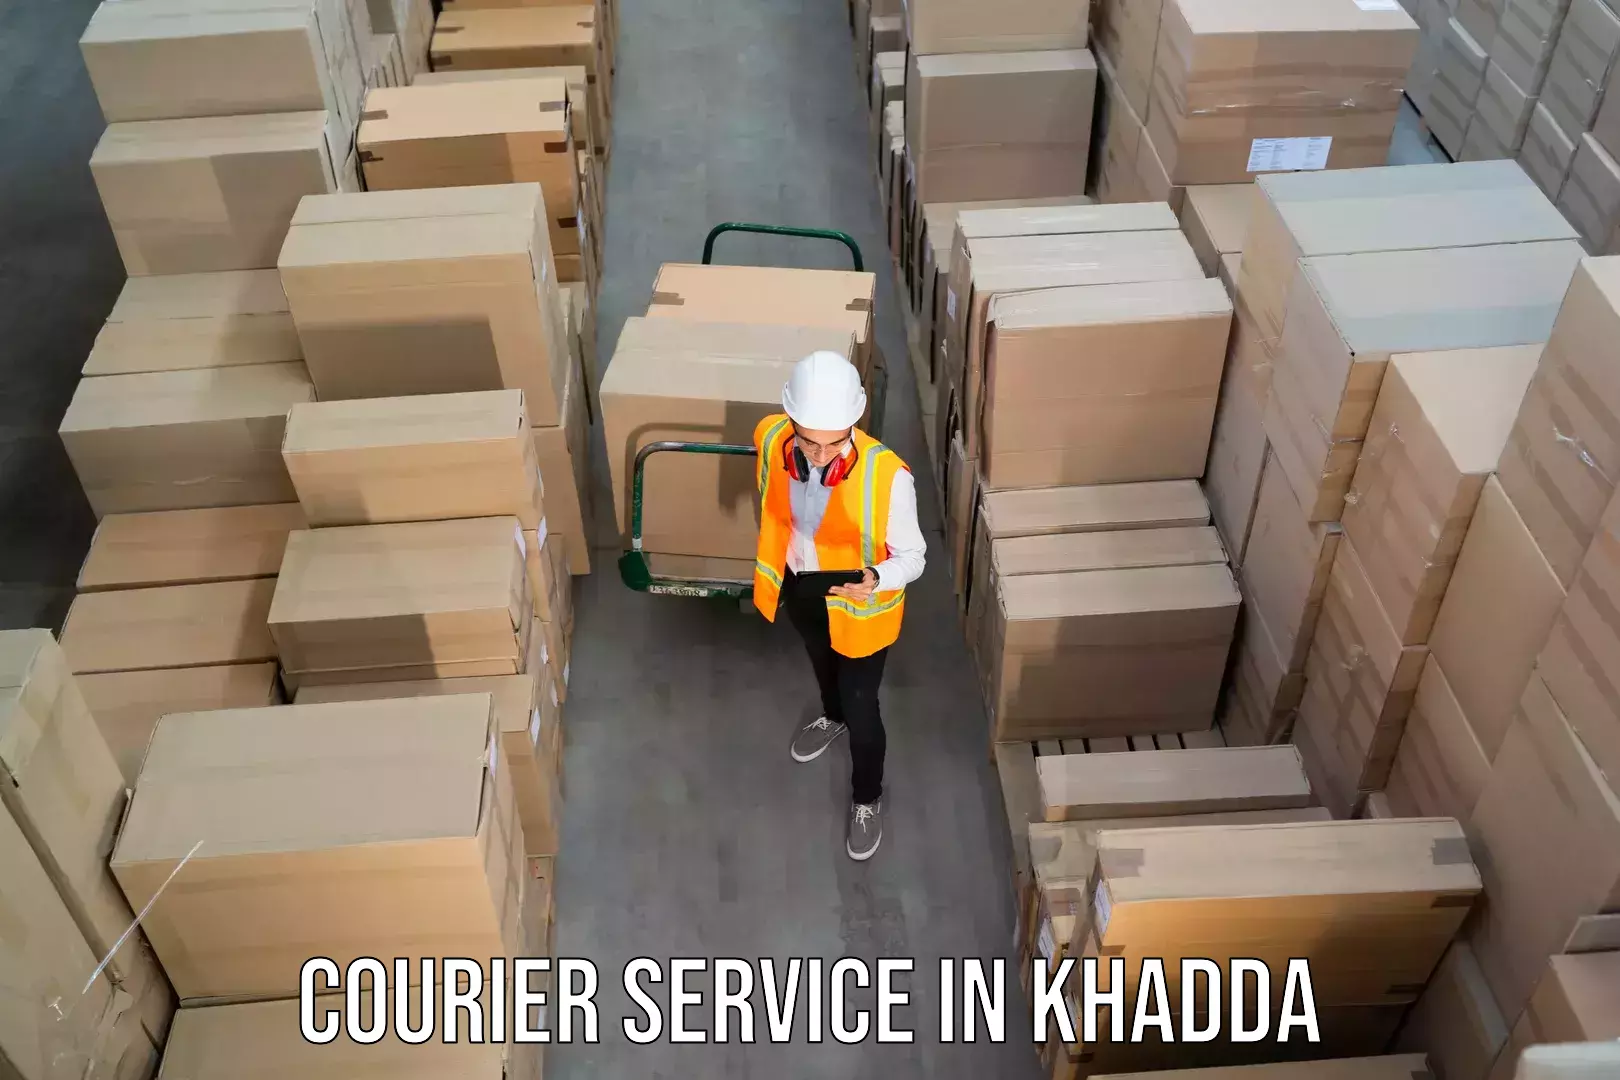 Cargo delivery service in Khadda